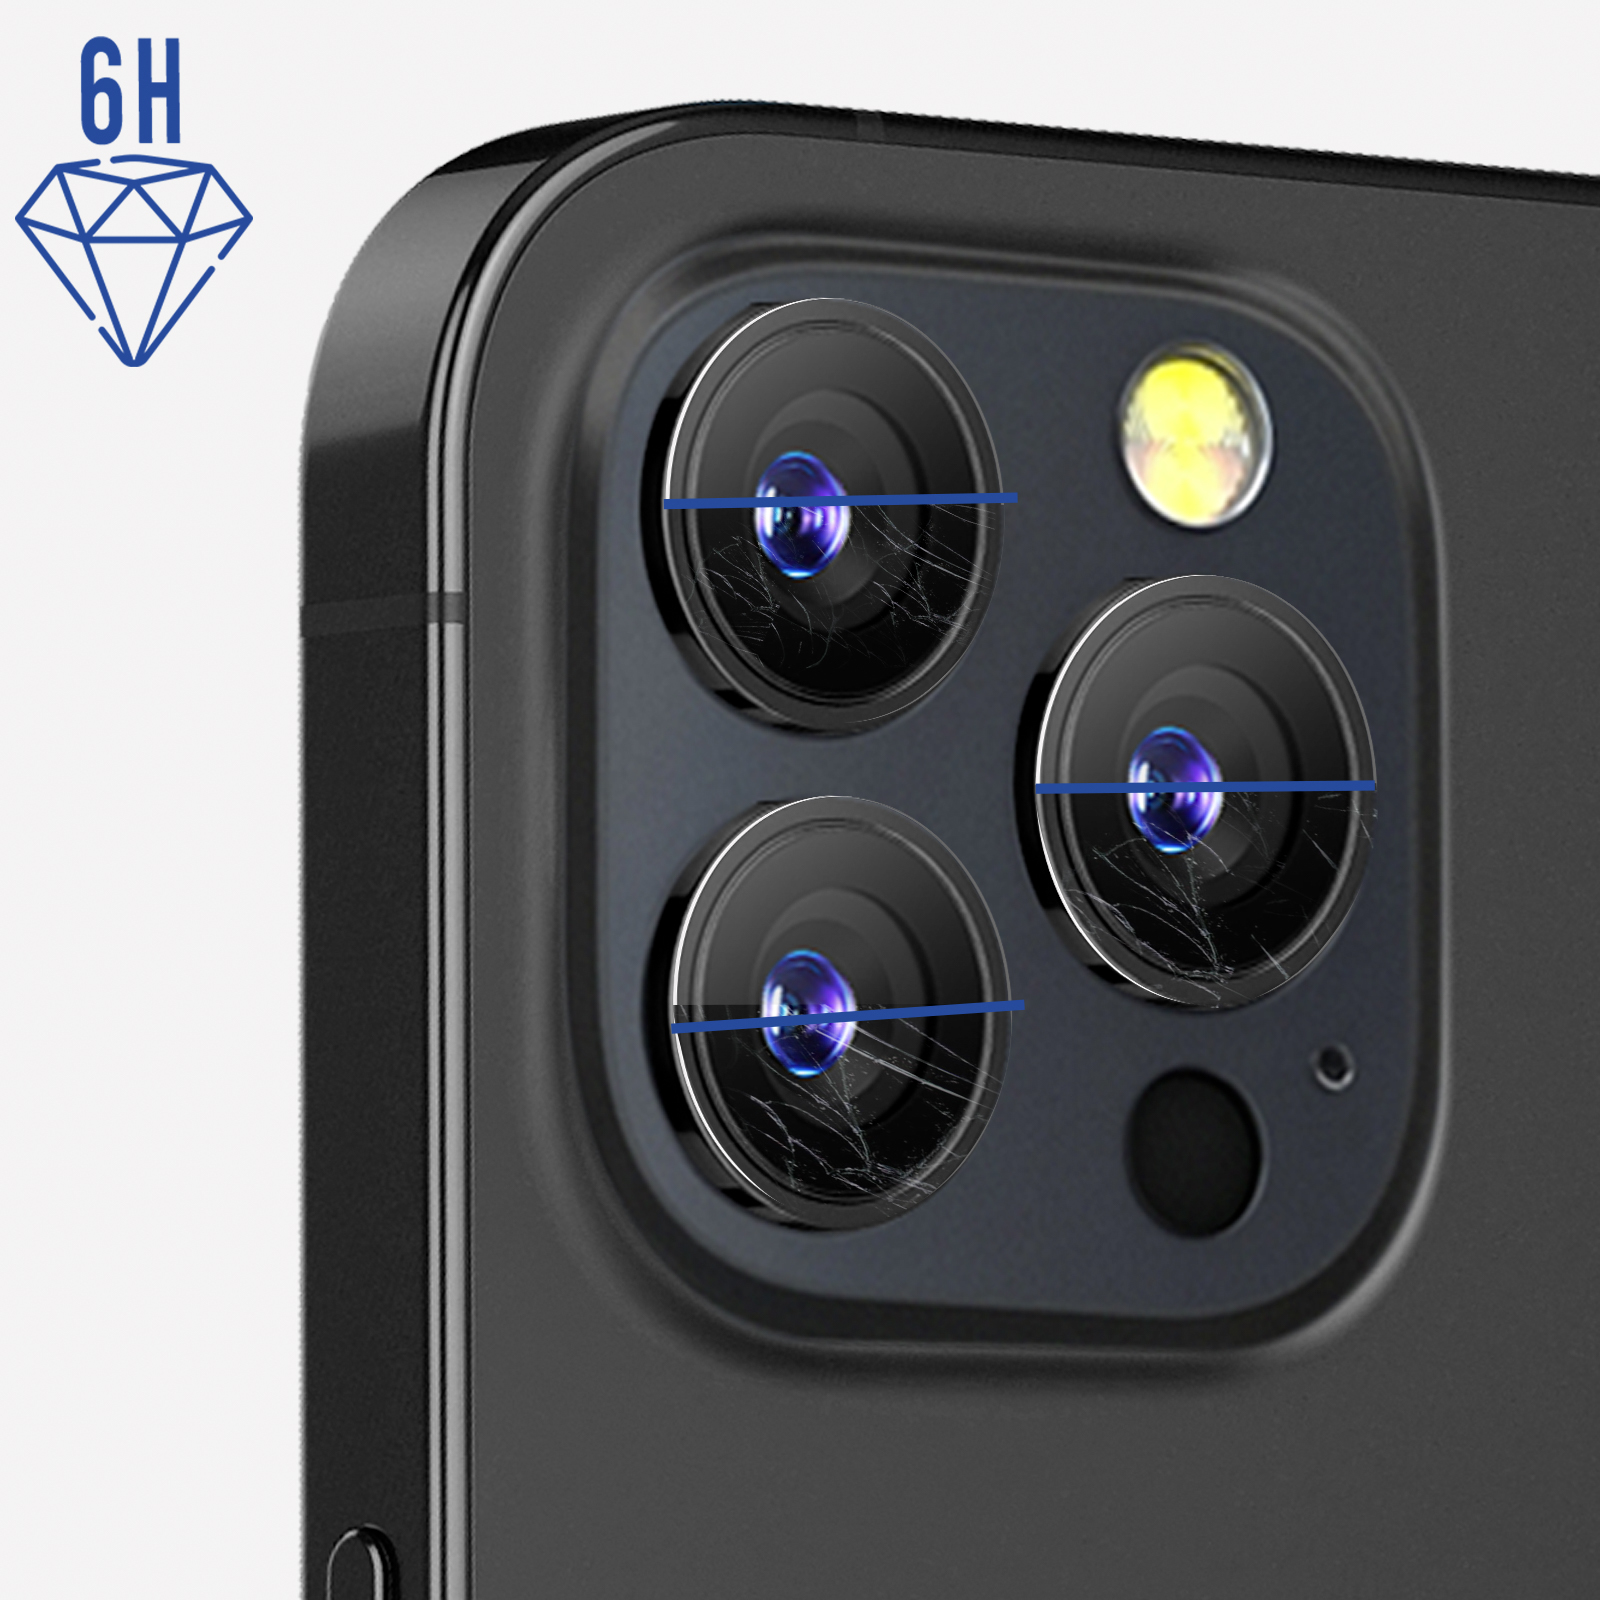 3MK Pro 3mk iPhone Apple 13 Glas(für Protection Apple Lens iPhone Pro - Apple 13 Max Max)